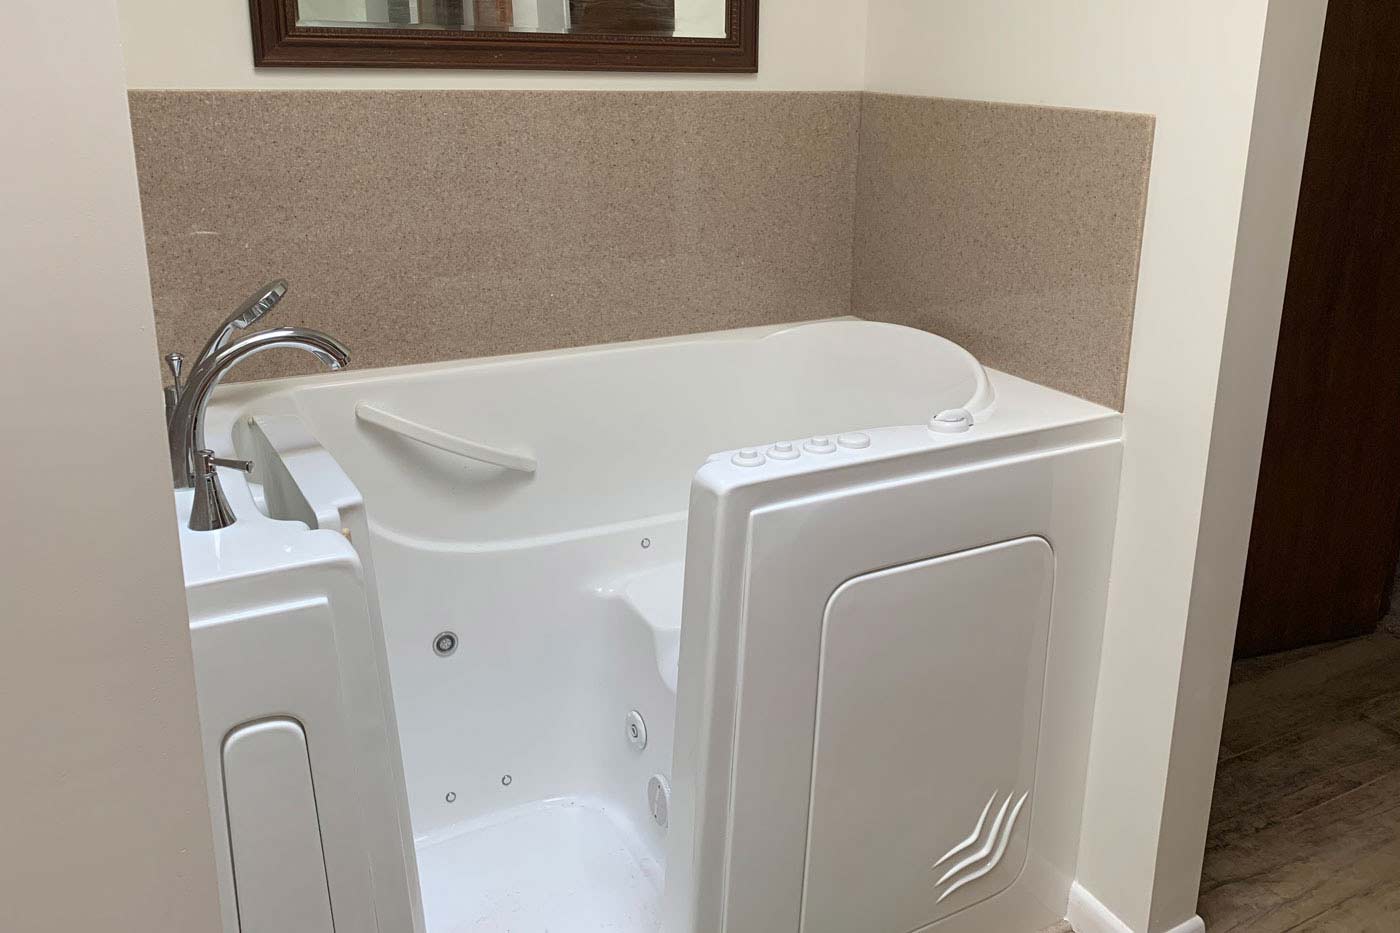 Brand new walk-in bathtub installed by True Craft Remodelrs in Illinois